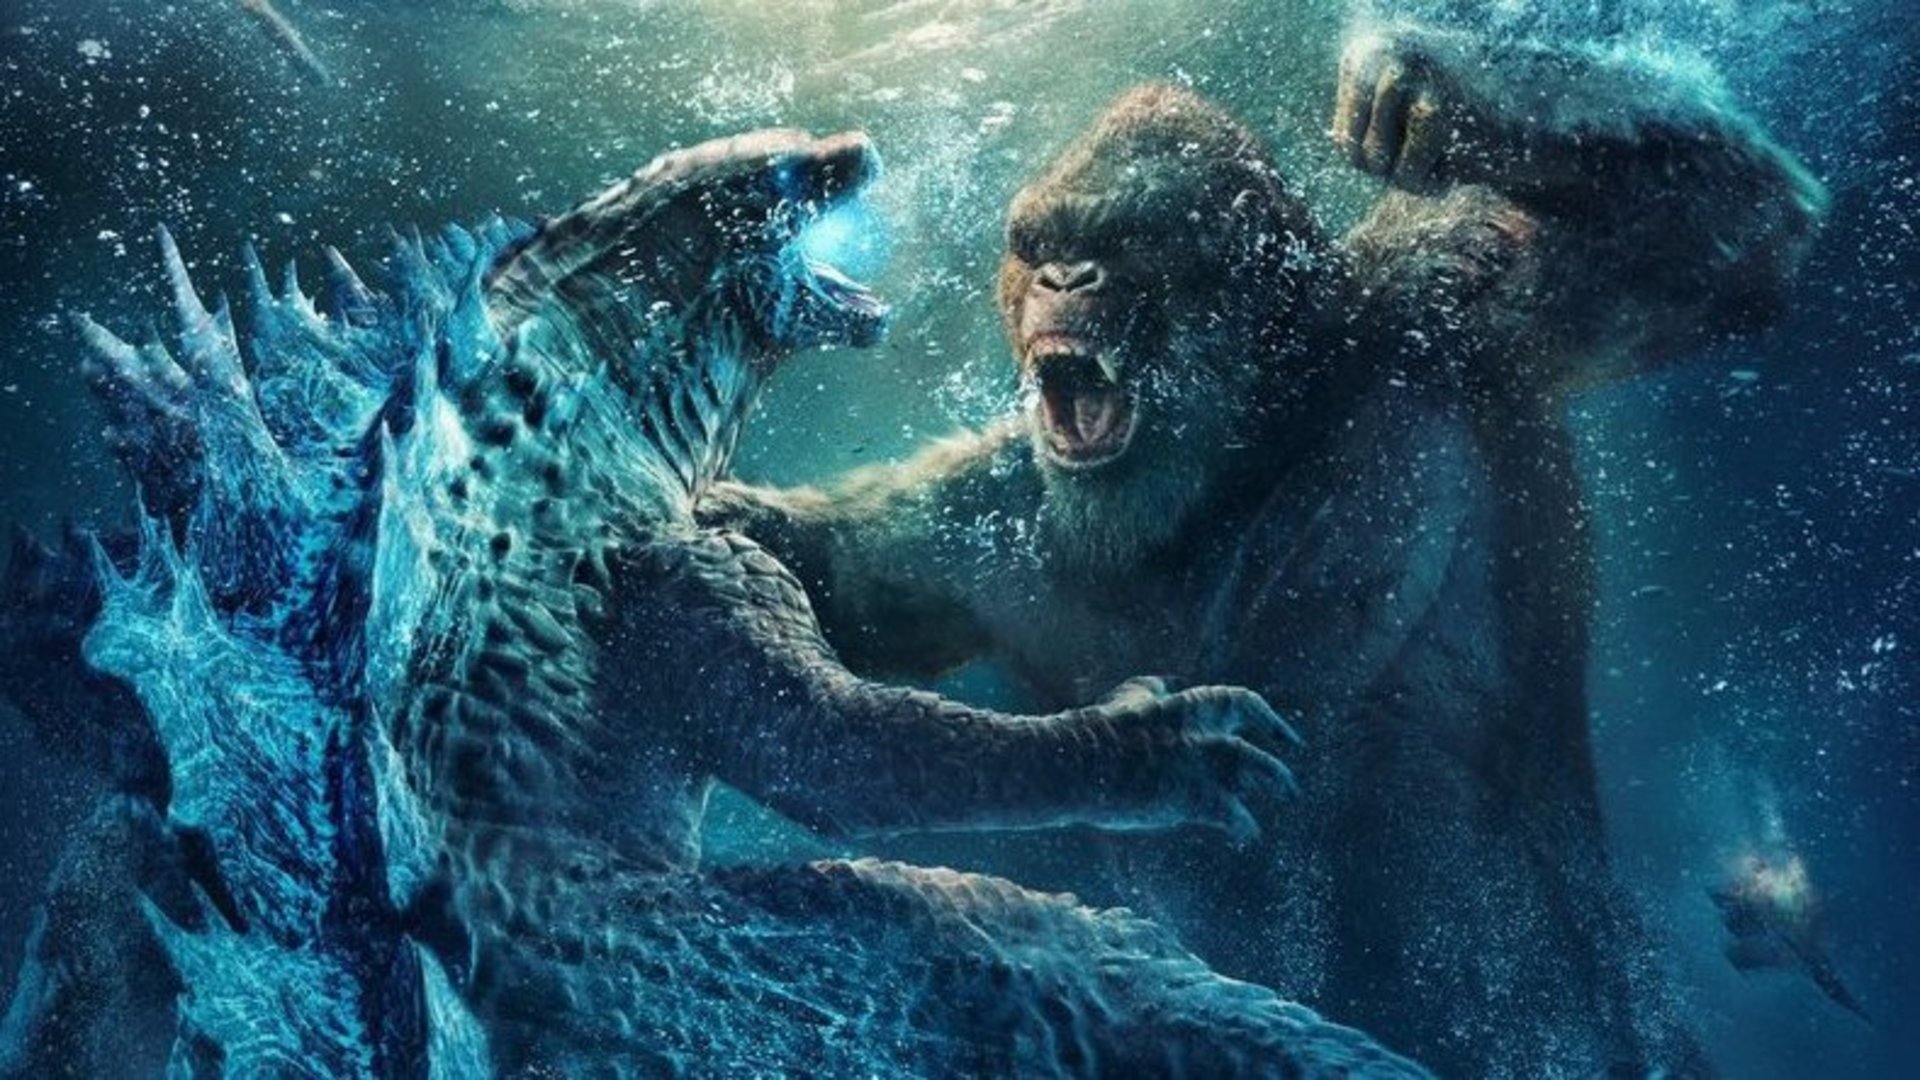 #„Godzilla vs. Kong“-Überraschung: Fortsetzung kommt doch schon bald – darum geht es wohl